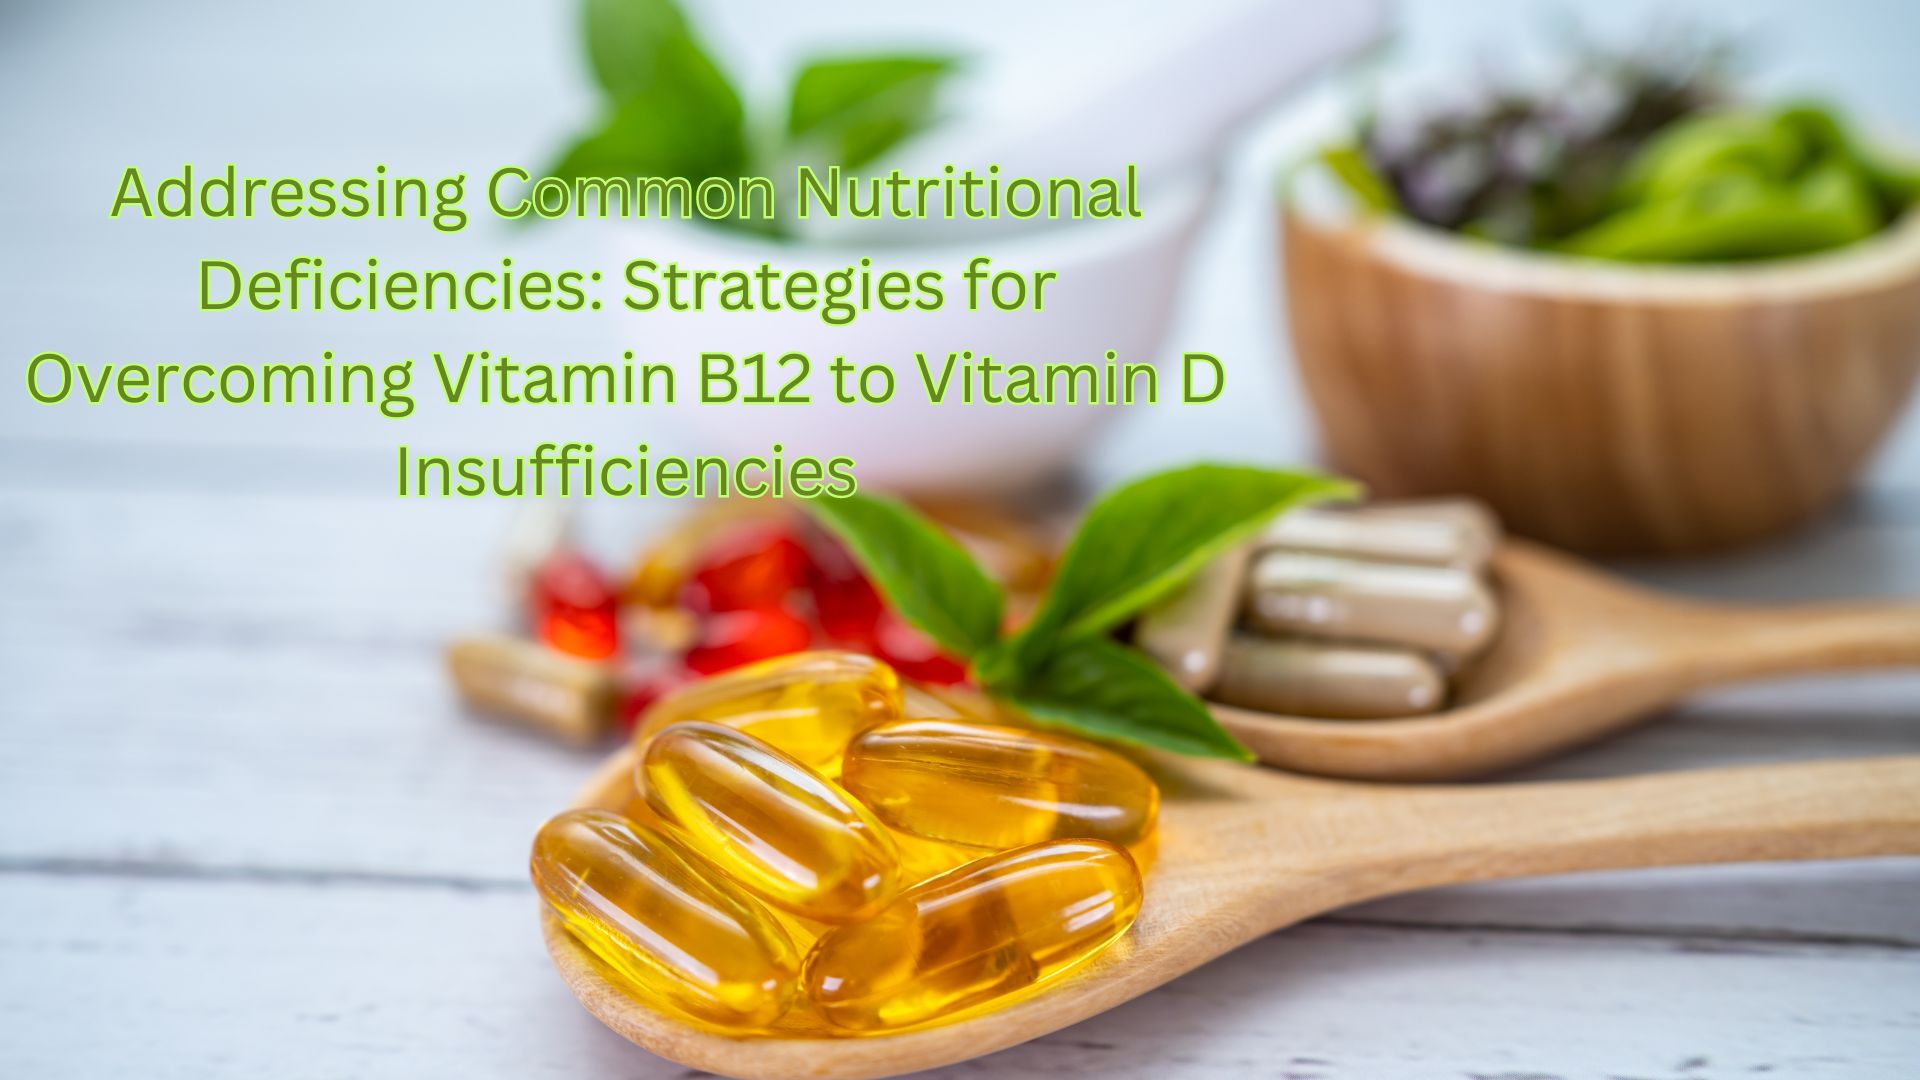 Addressing Common Nutritional Deficiencies: Strategies for Overcoming Vitamin B12 to Vitamin D Insufficiencies